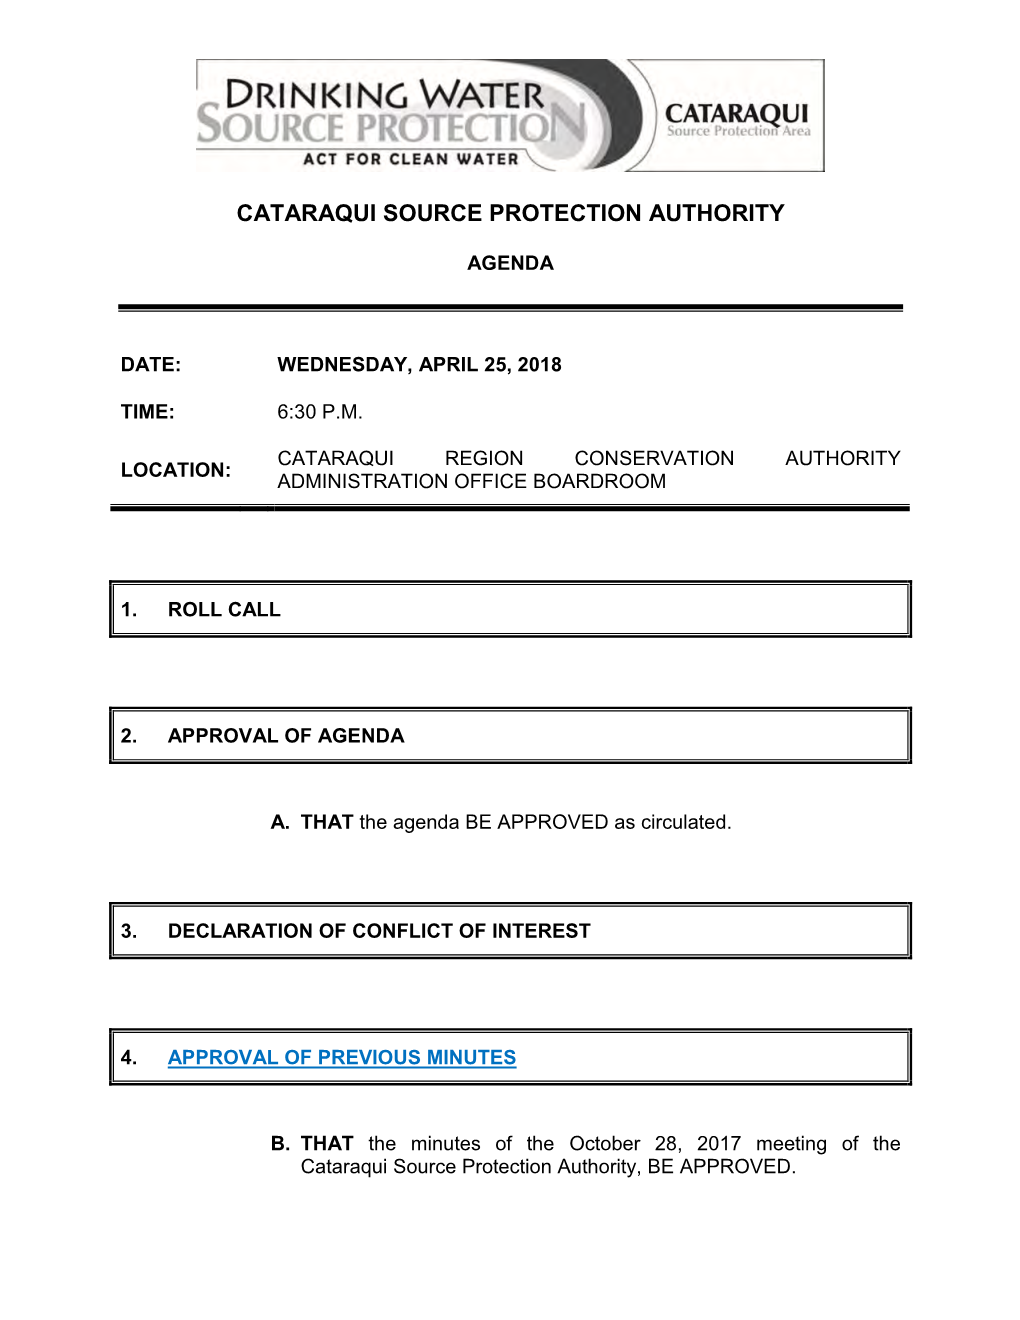 Cataraqui Source Protection Authority